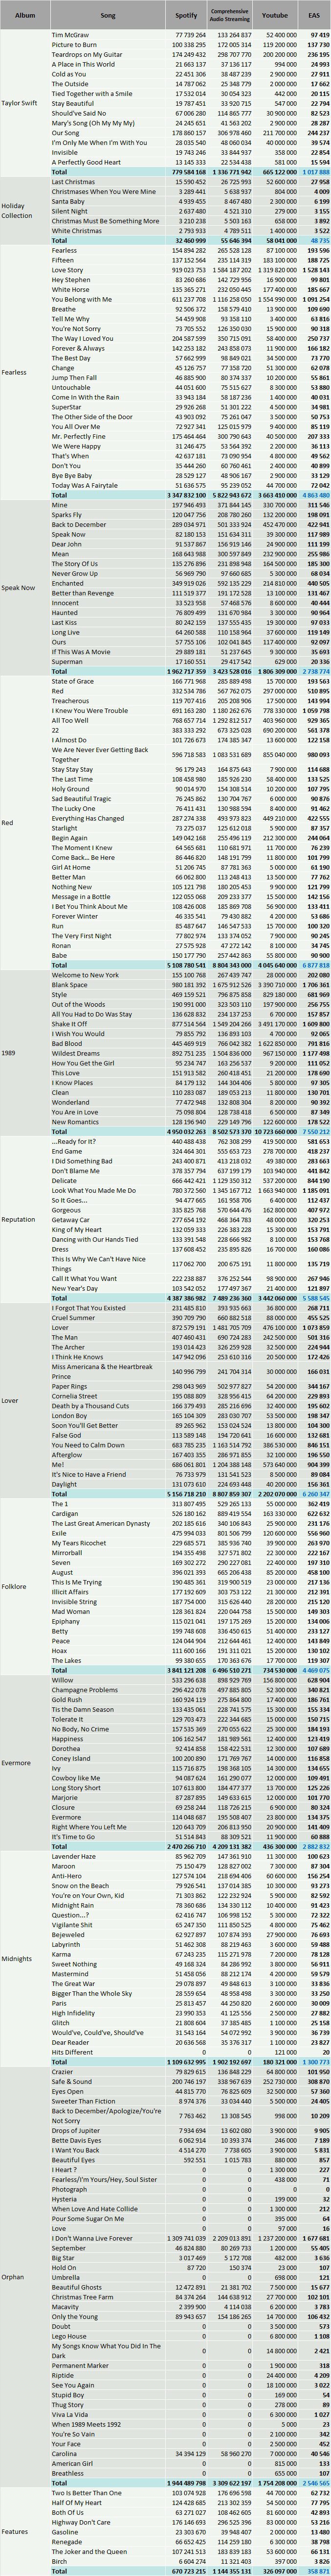 CSPC 202211 Taylor Swift discography streaming statistics